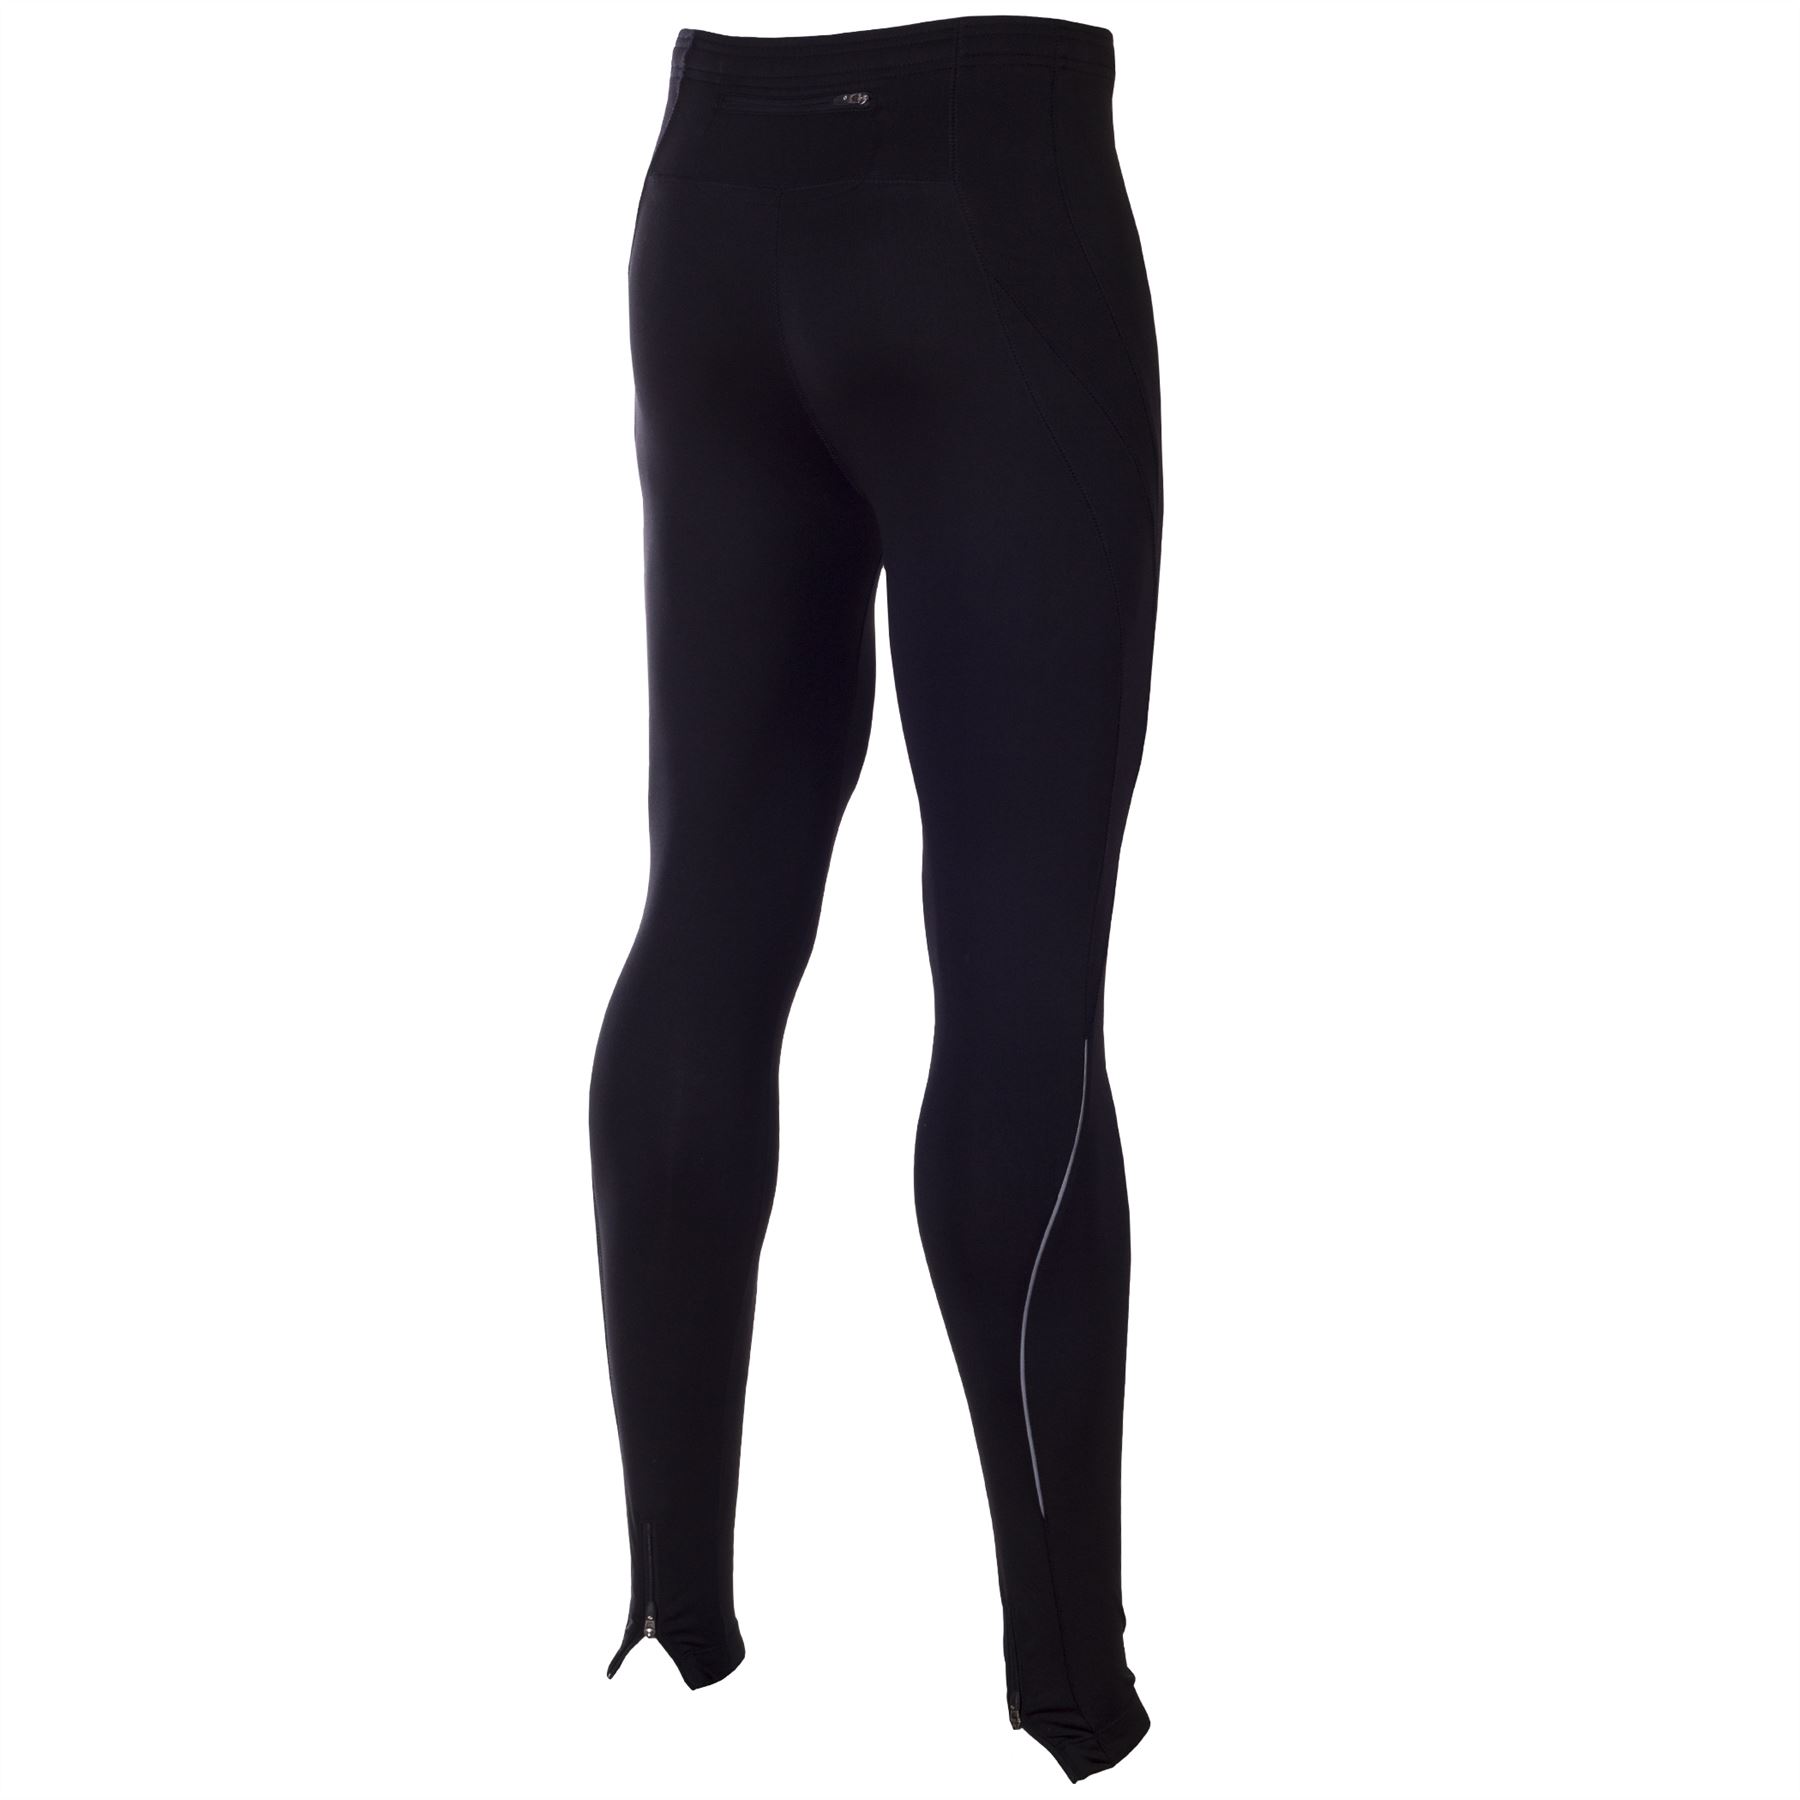 Soc Men's MRFC THS Tights Pants Black Fitness Gym Running Sports ...